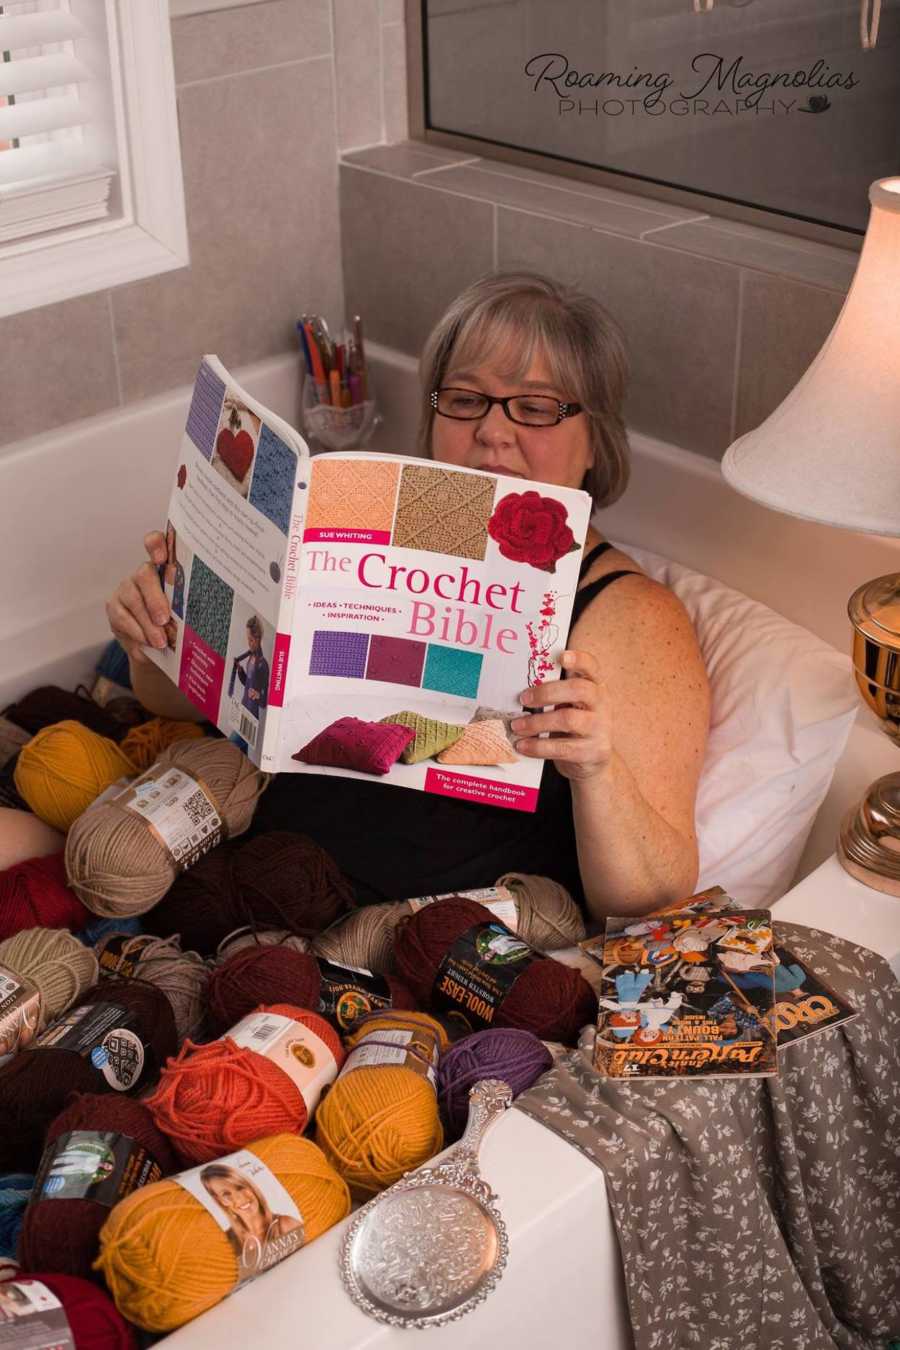 Woman lays in bathtub full of yarn reading magazine called, "The Crochet Bible"